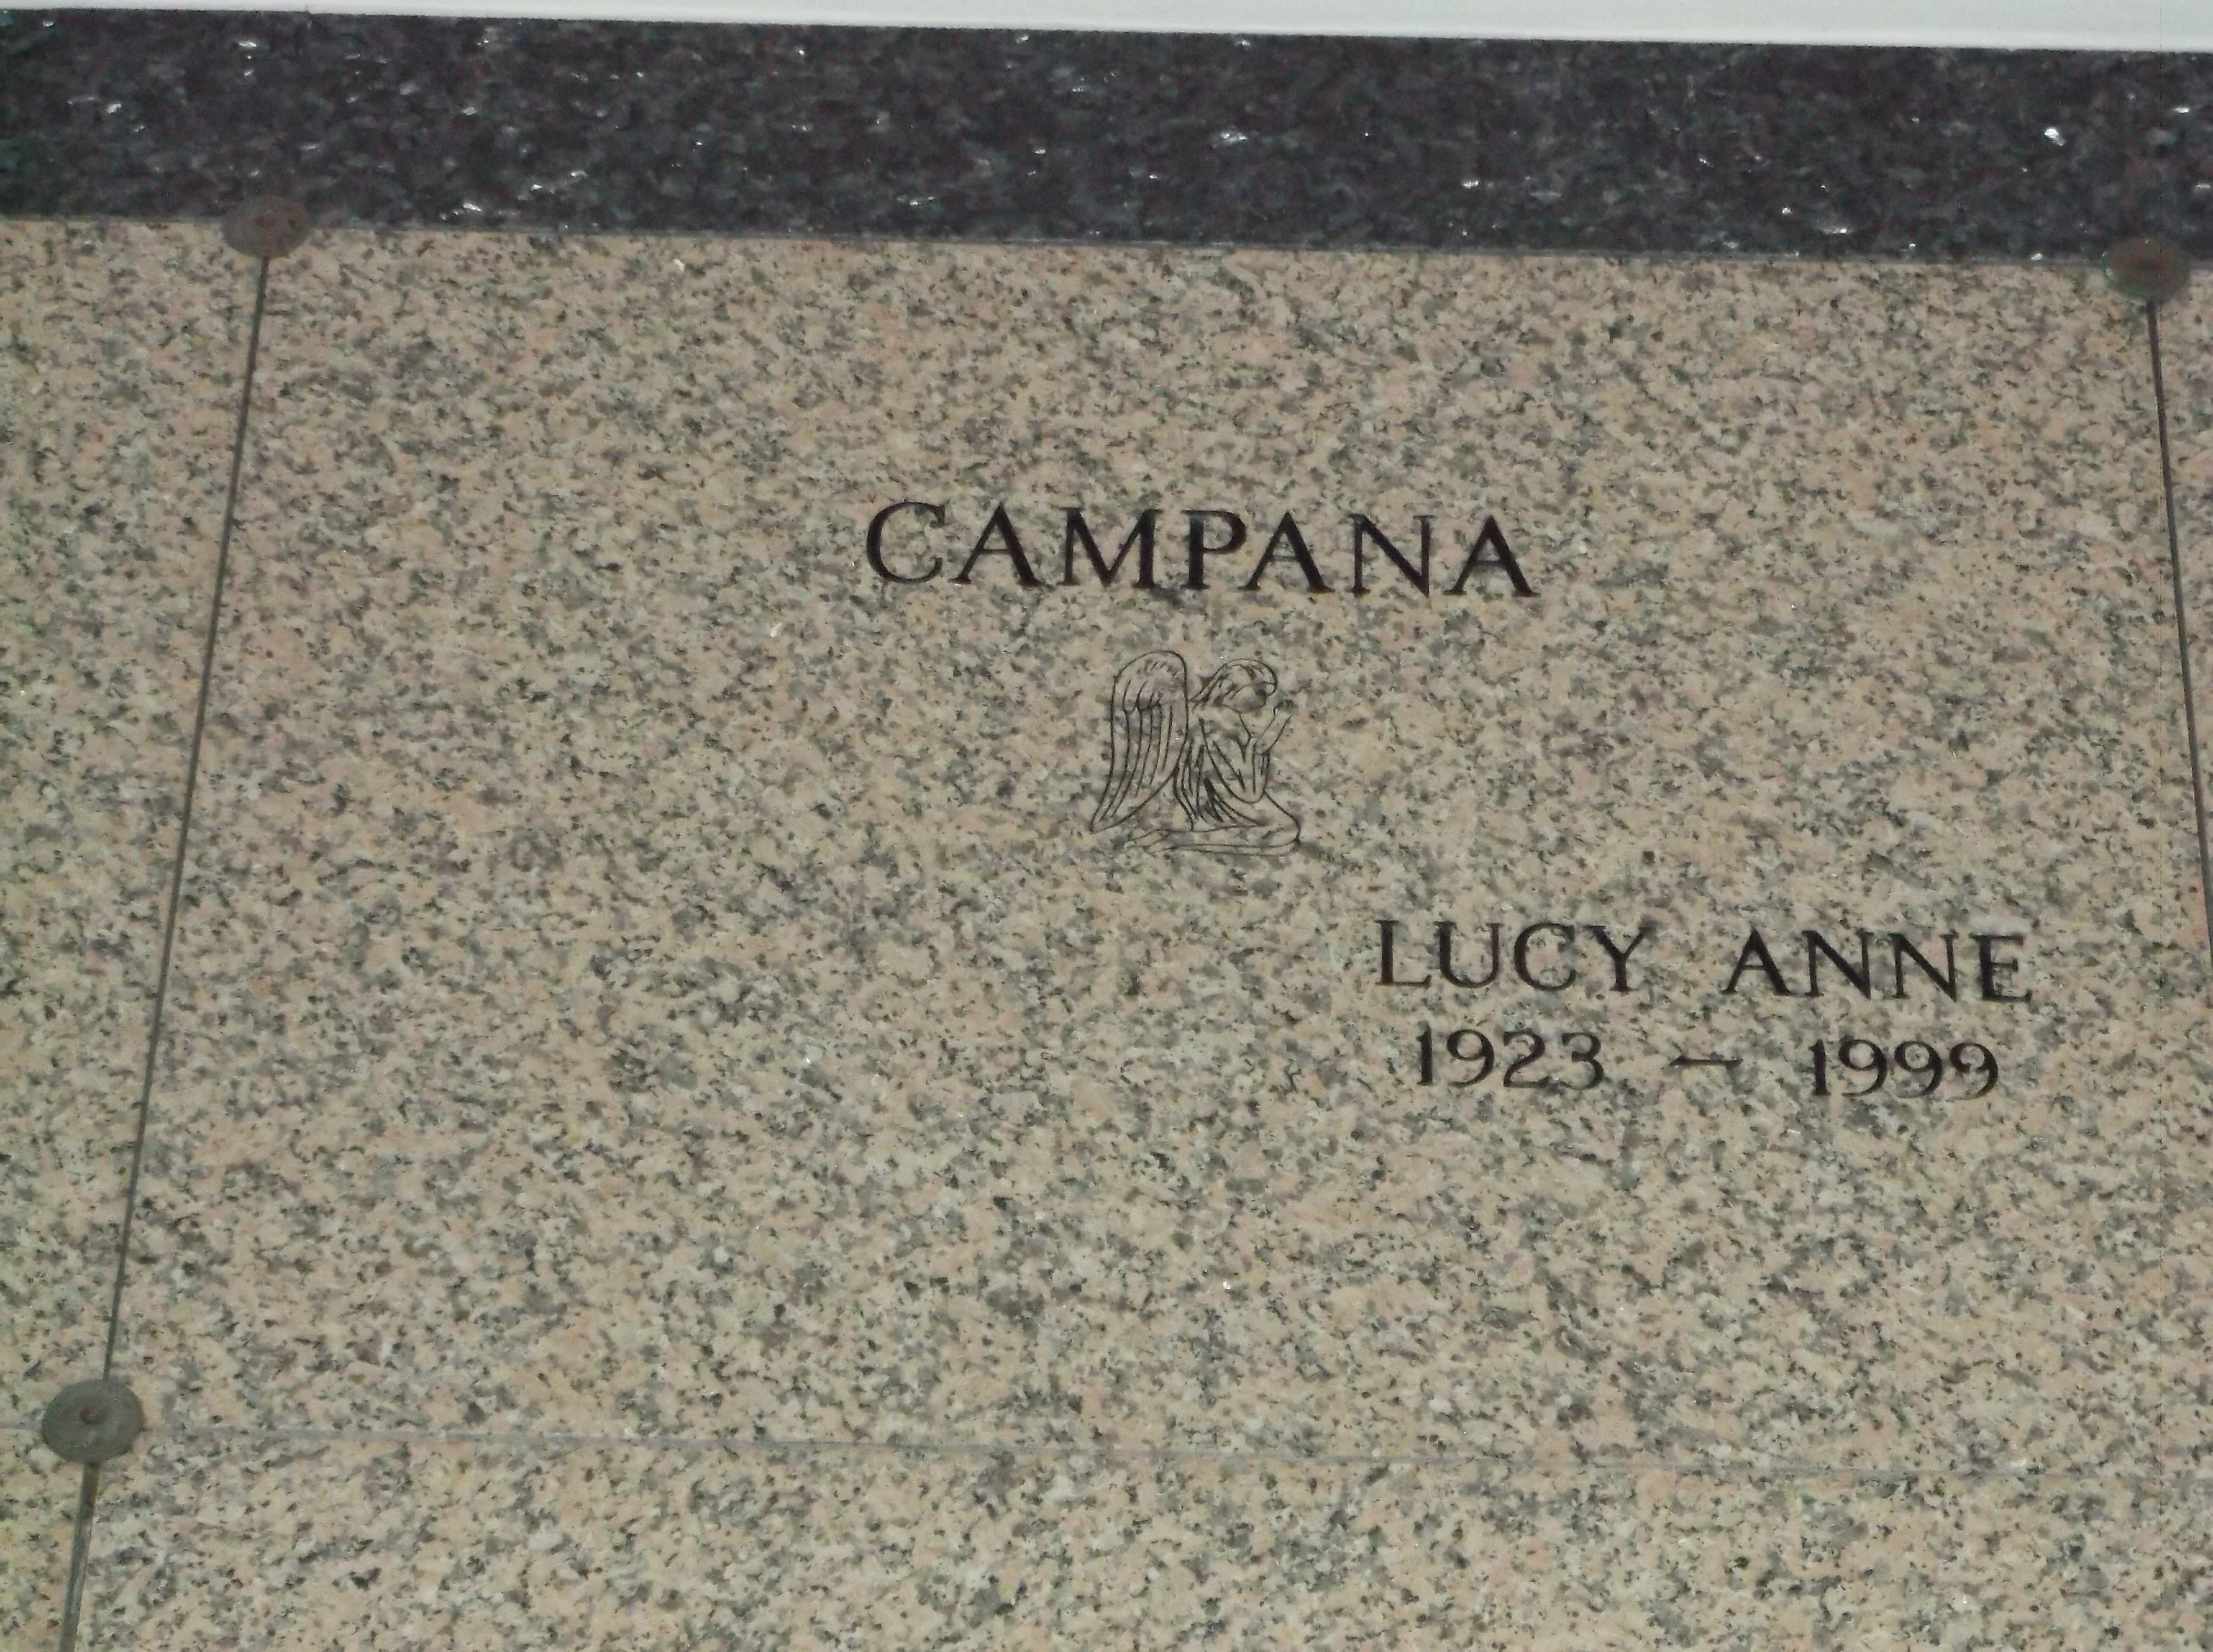 Lucy Anne Campana